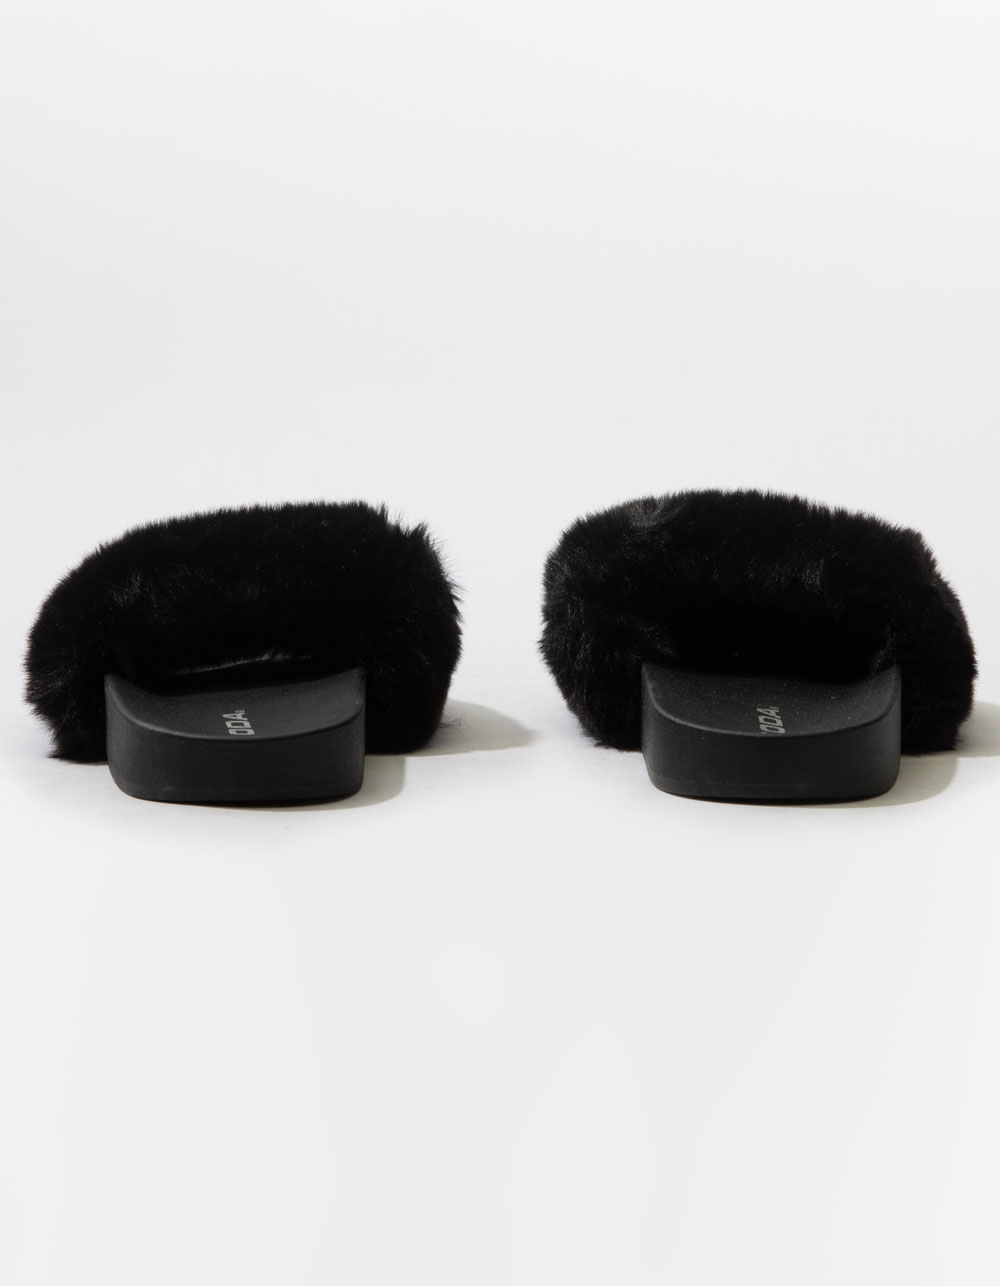 Black Faux Fur Slides | Black Slides with Faux Fur - Vhny 8M / Black